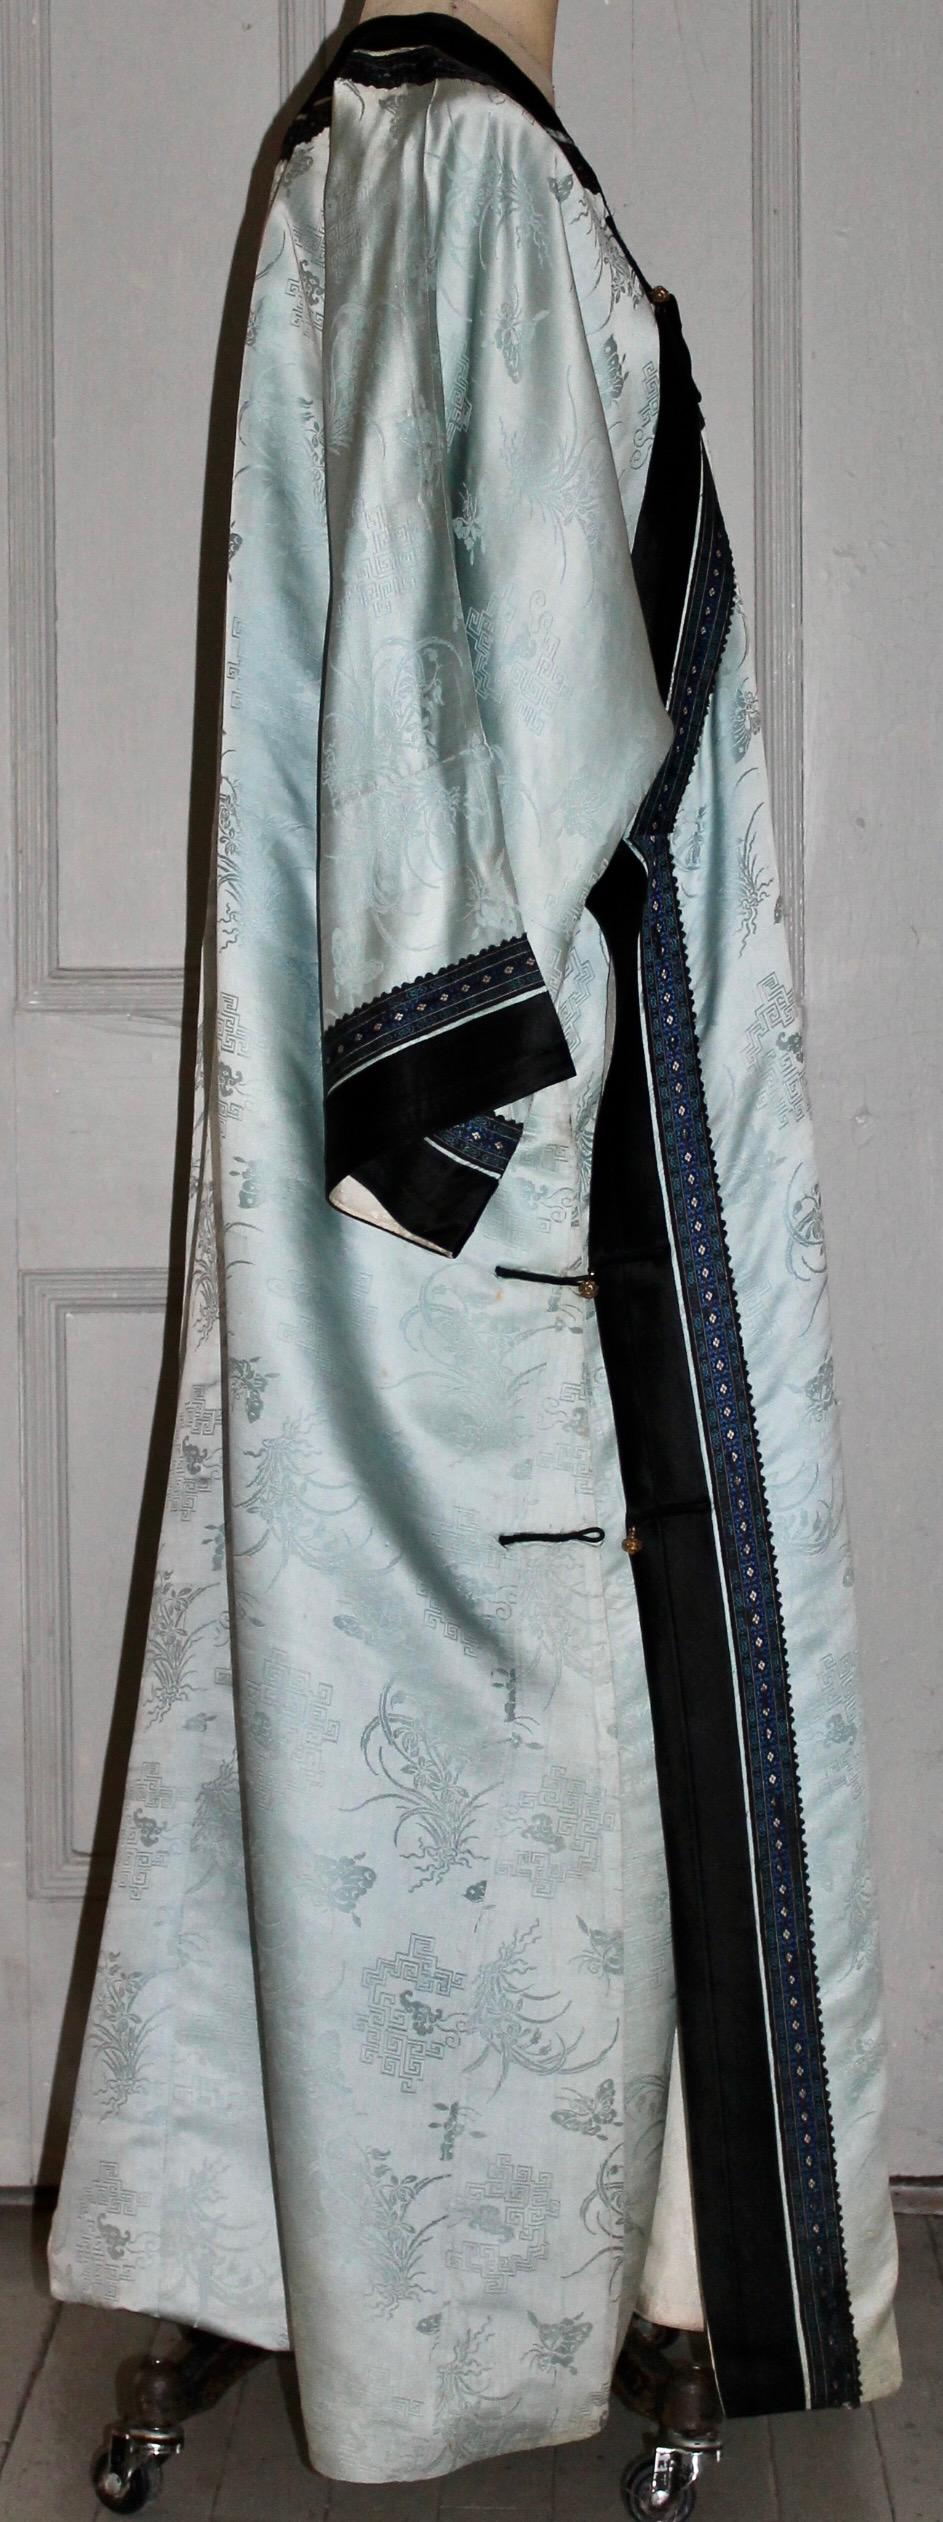 Antique Chinese Silk Kimono or Robe For Sale 2